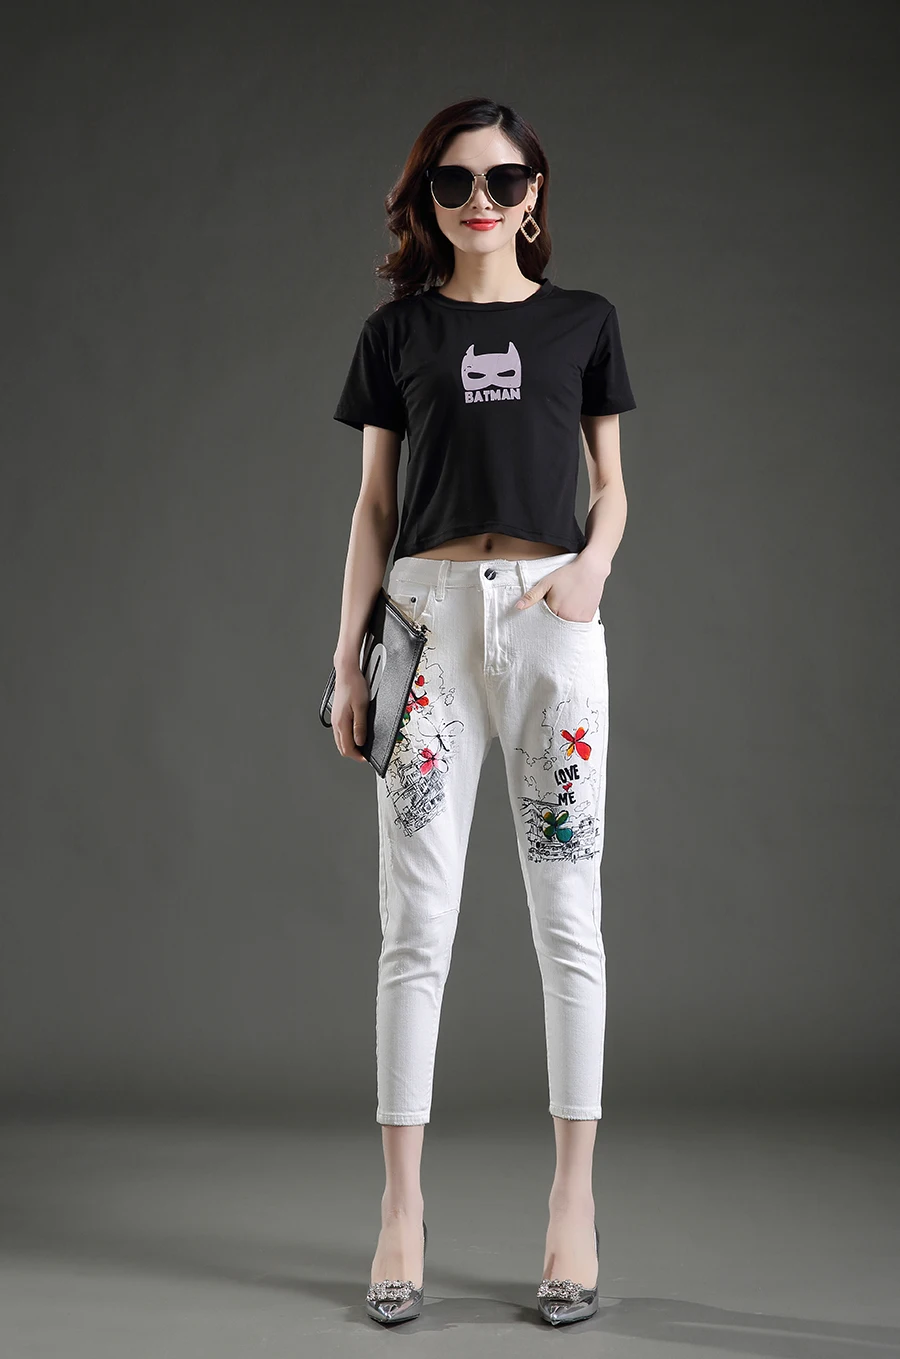 Dongdongta Women Cross-pants 2017 New Original Design Mid Waist Painted Washed Pattern Fashion Summer Girls Female Cotton Jeans 8